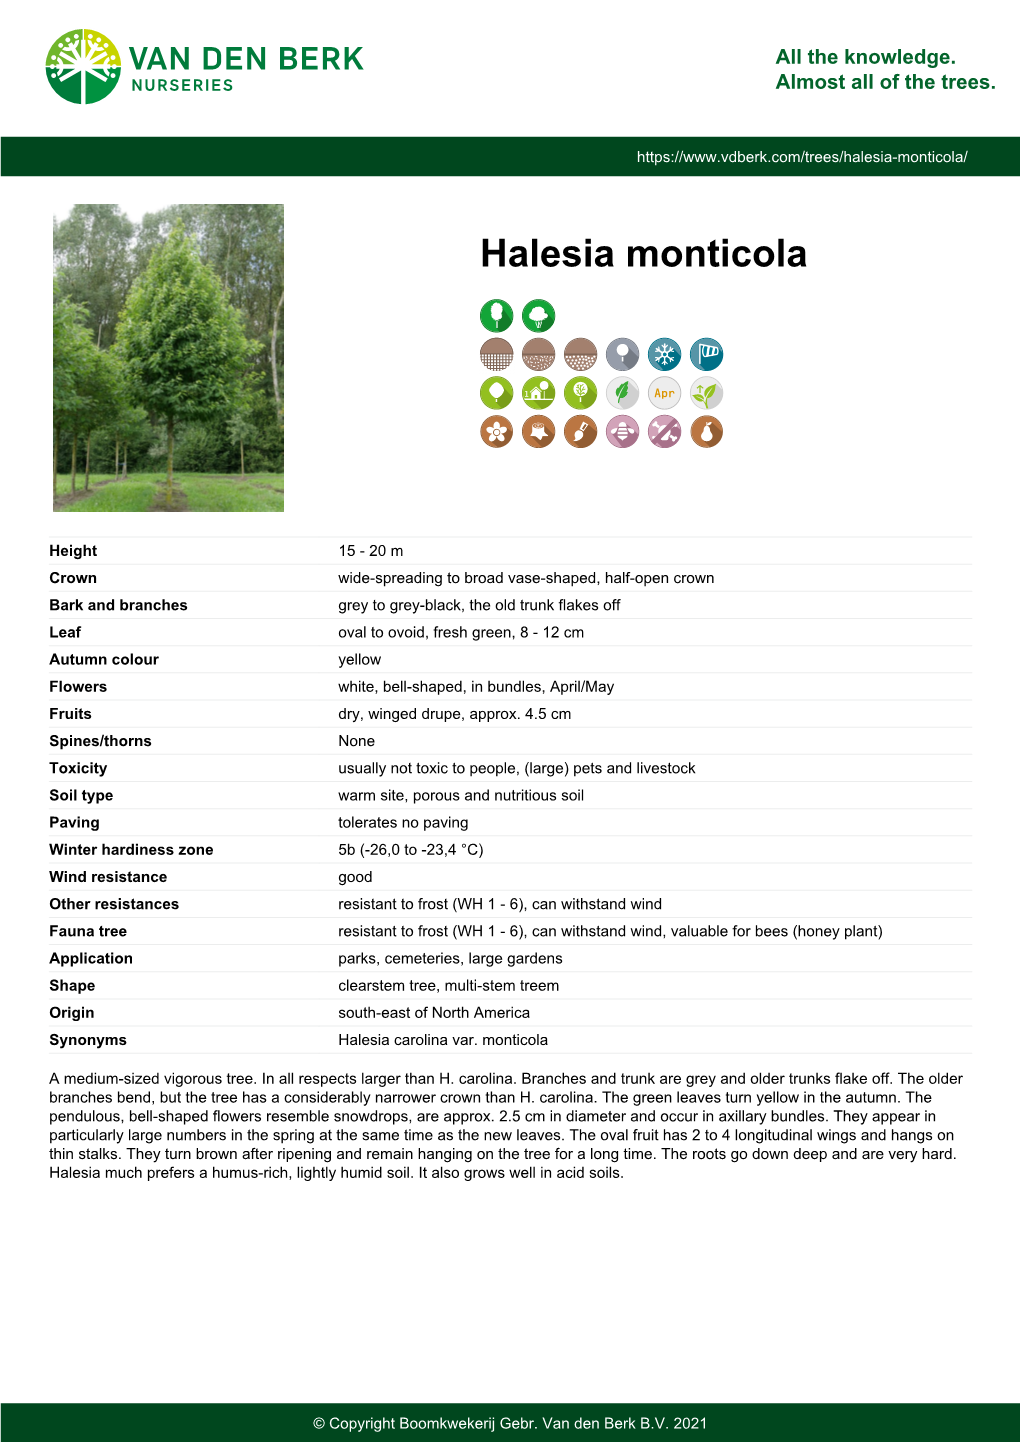 Halesia Monticola